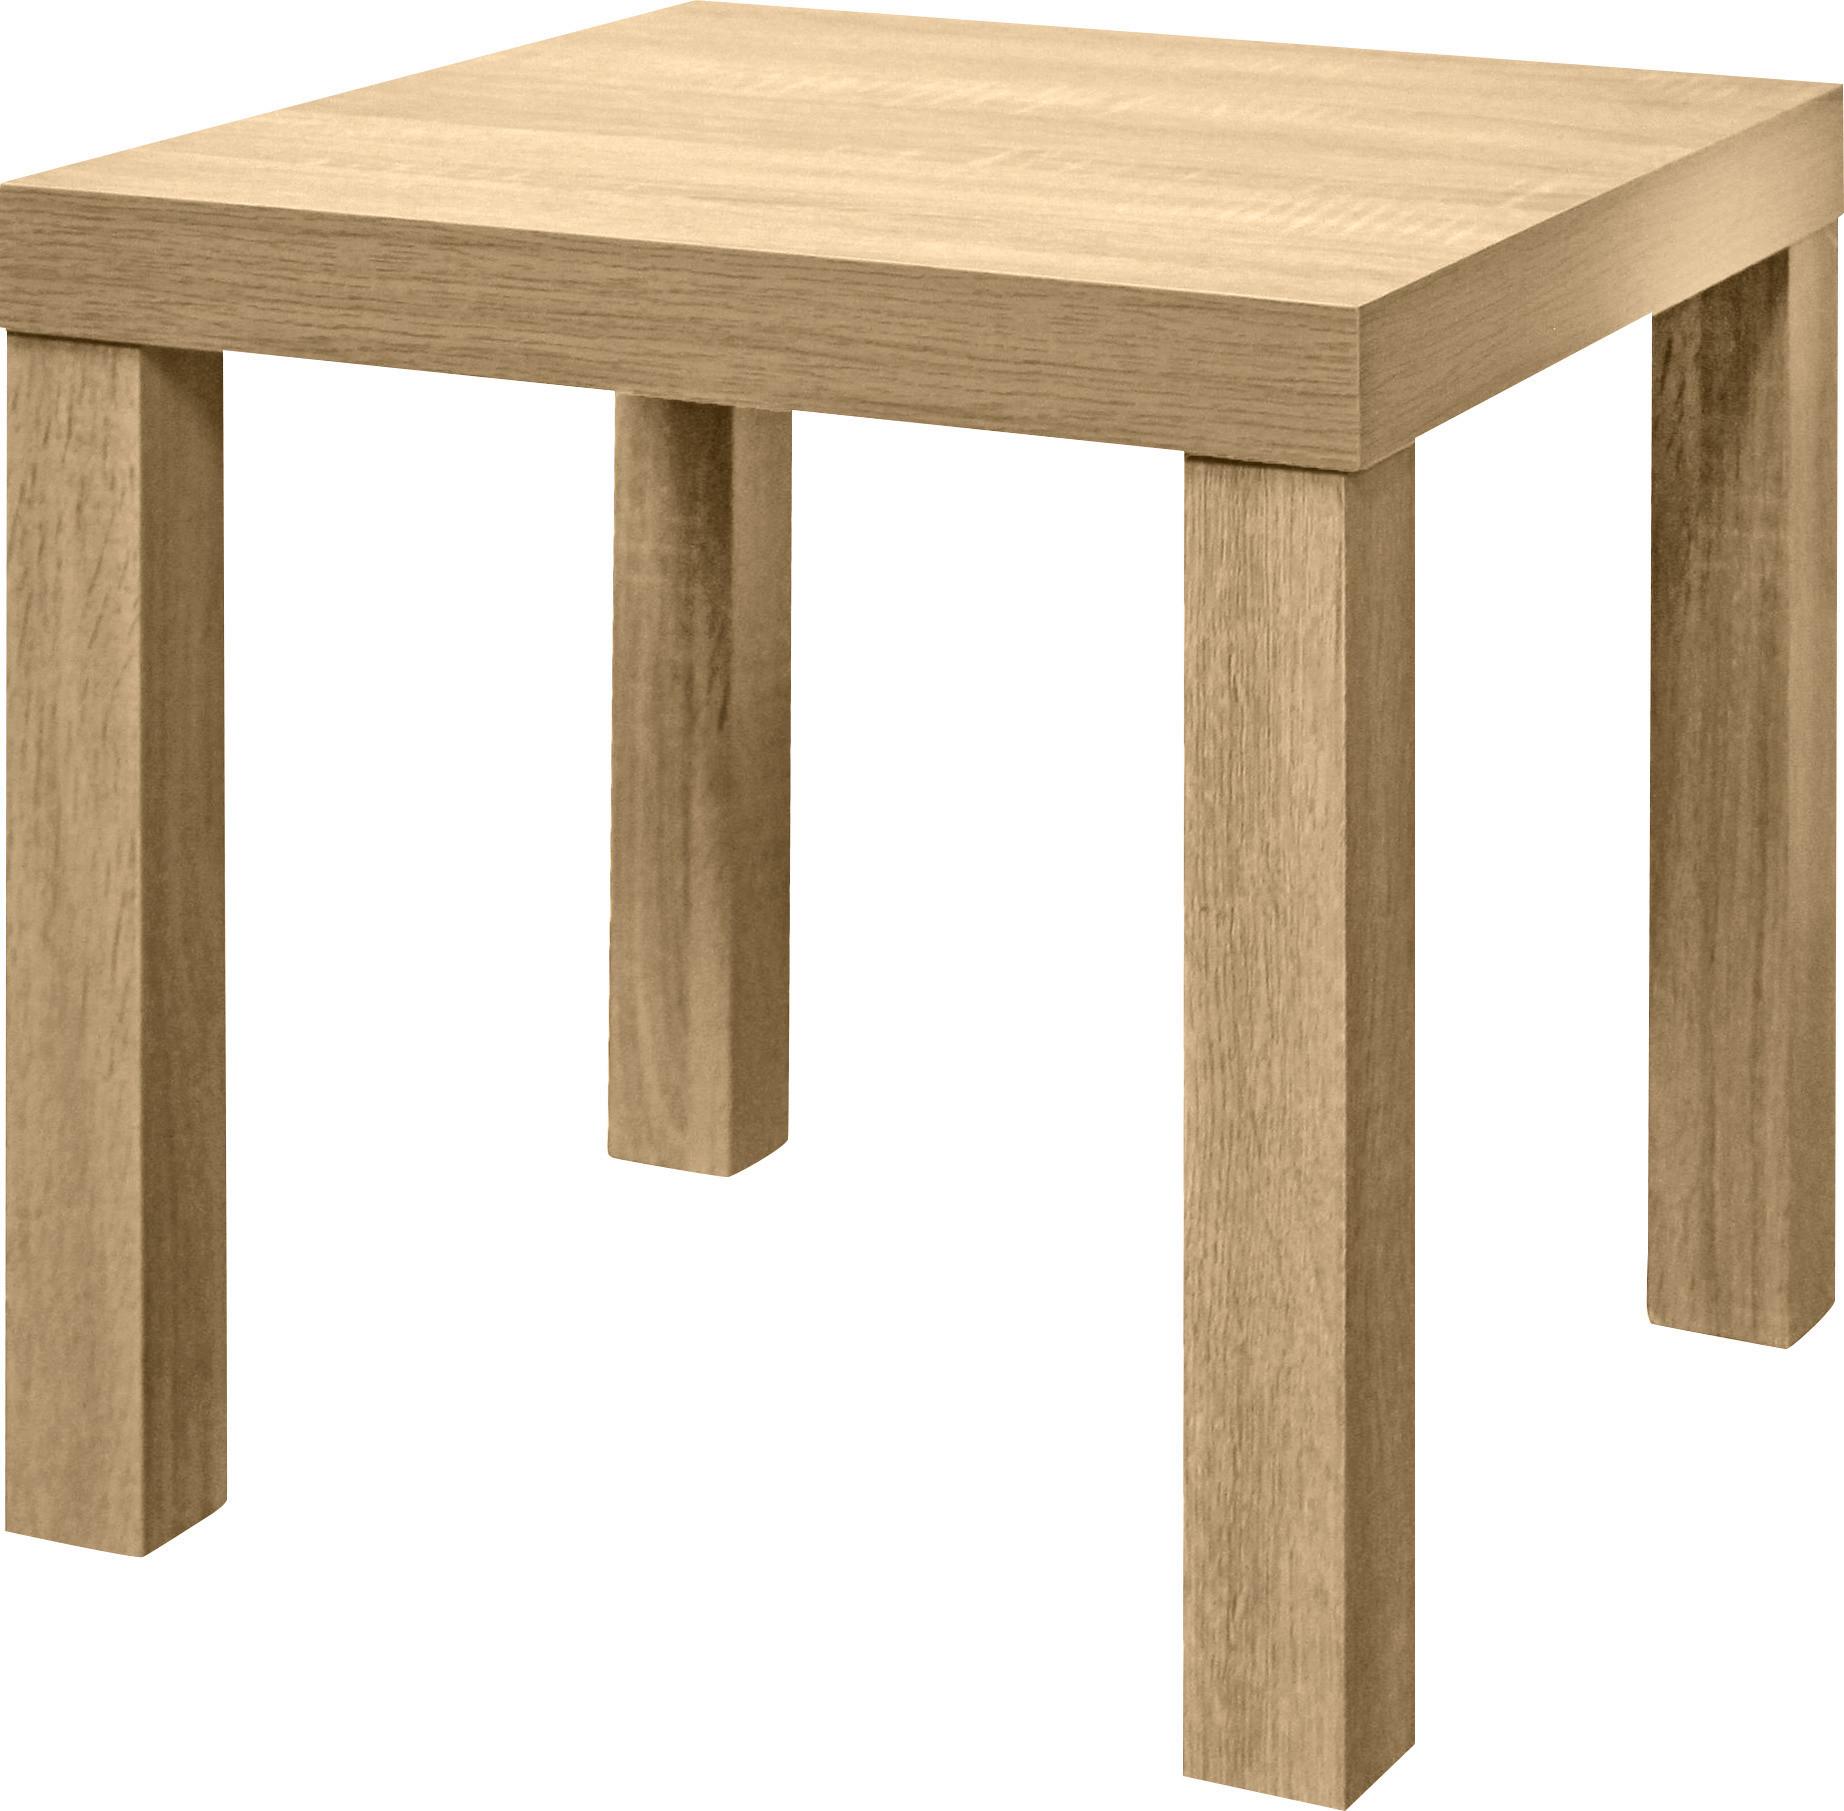 Pomoćni Stolić Normen - hrast Sonoma, Modern, drvni materijal (39/40/39cm) - Based